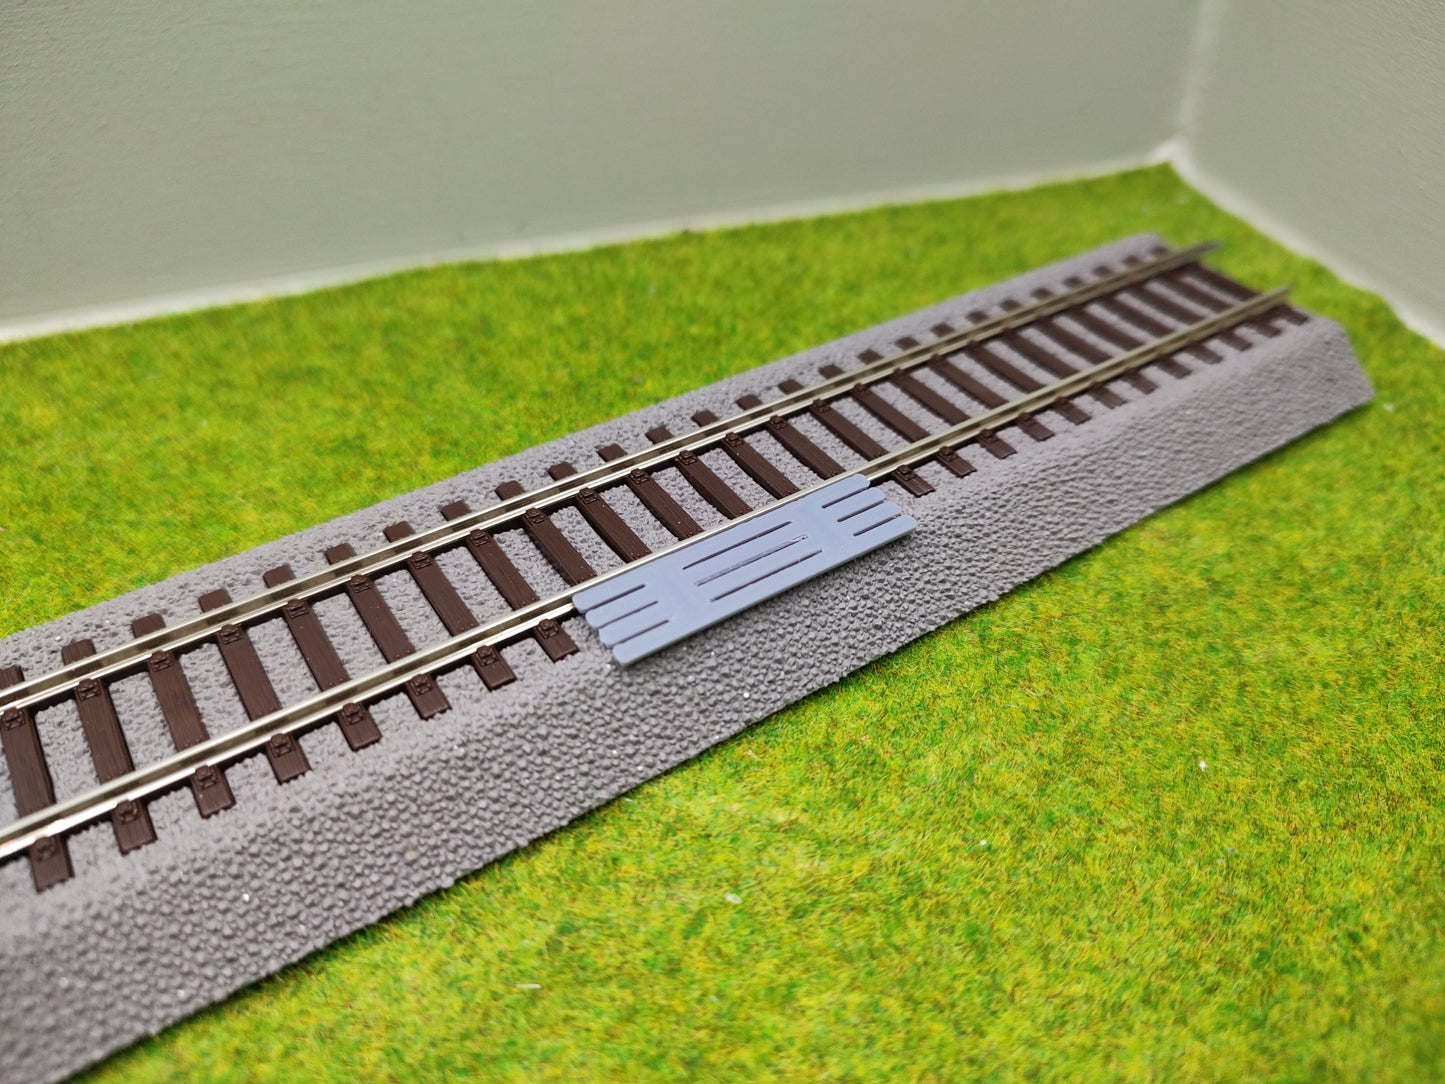 Bahnübergang H0 für Roco Line Gleis -58x40mm - grau